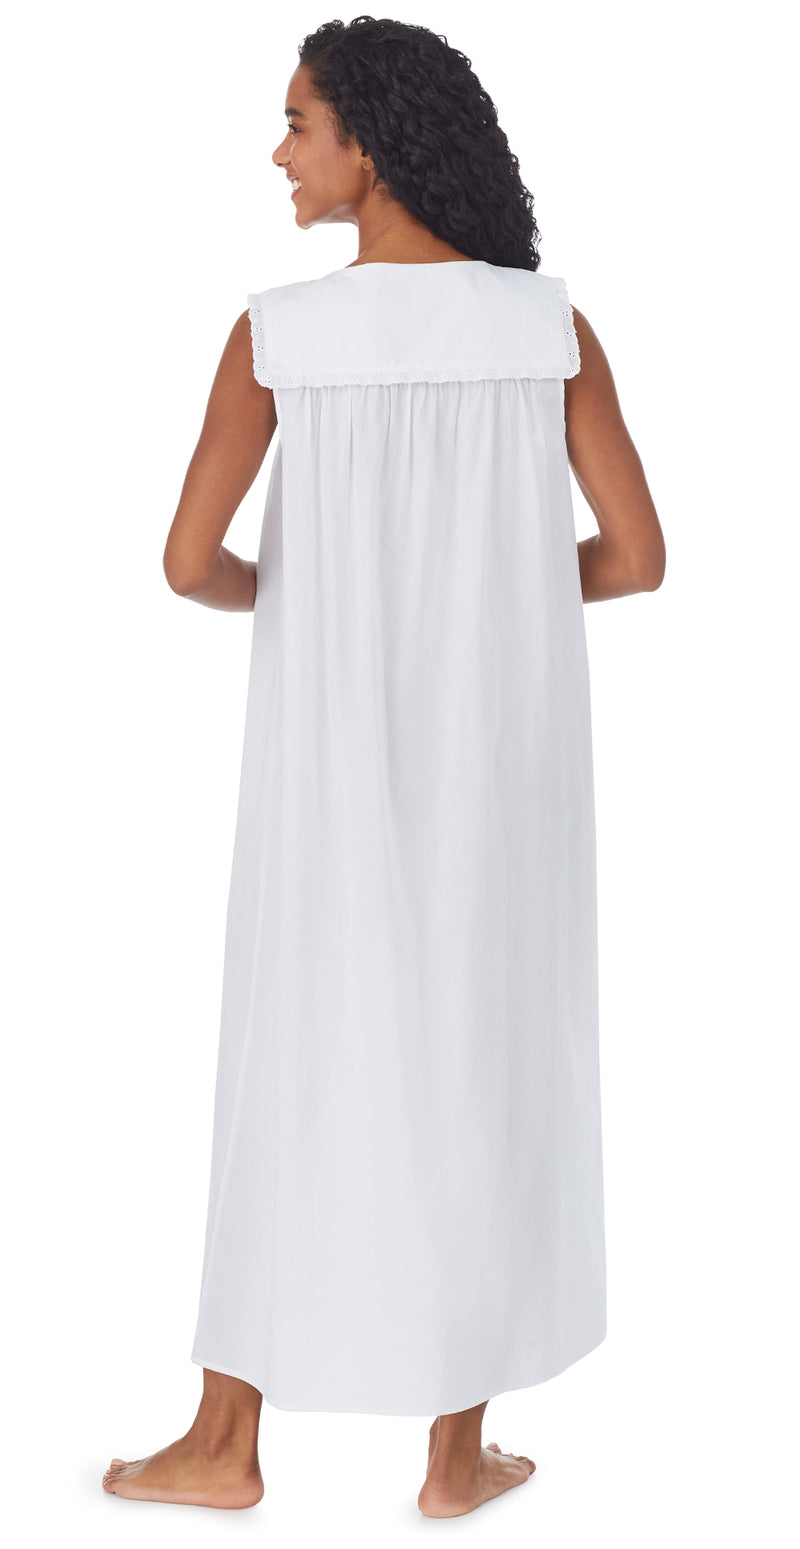 Madeline Ladies White Cotton Nightgown - Jacaranda Living